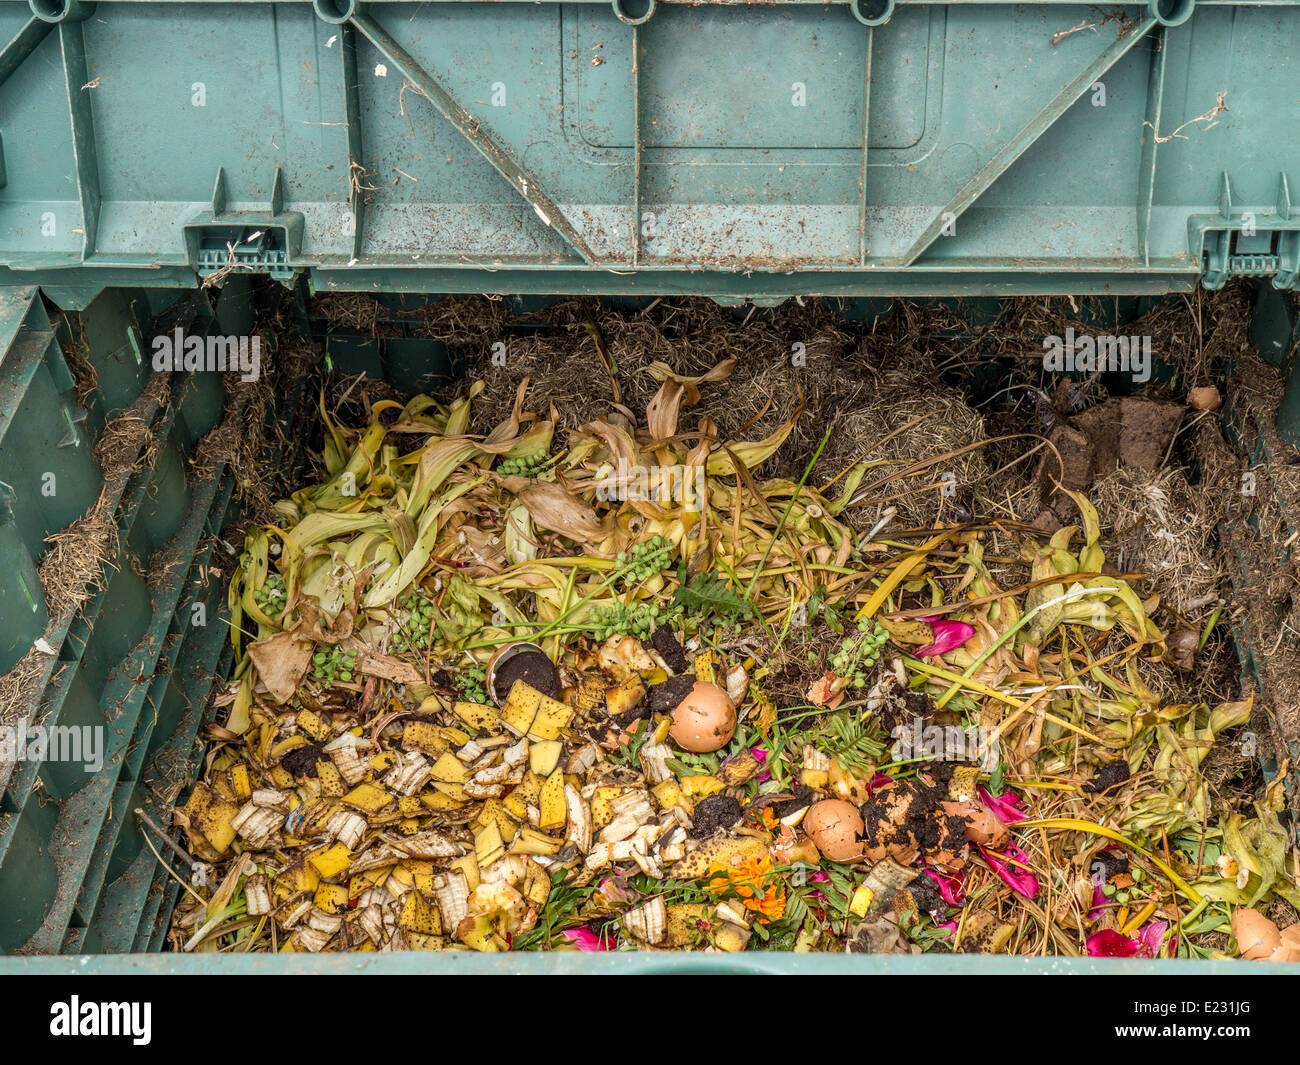 Green plastic compost bin full of organic and domestic food scraps Stock Photo